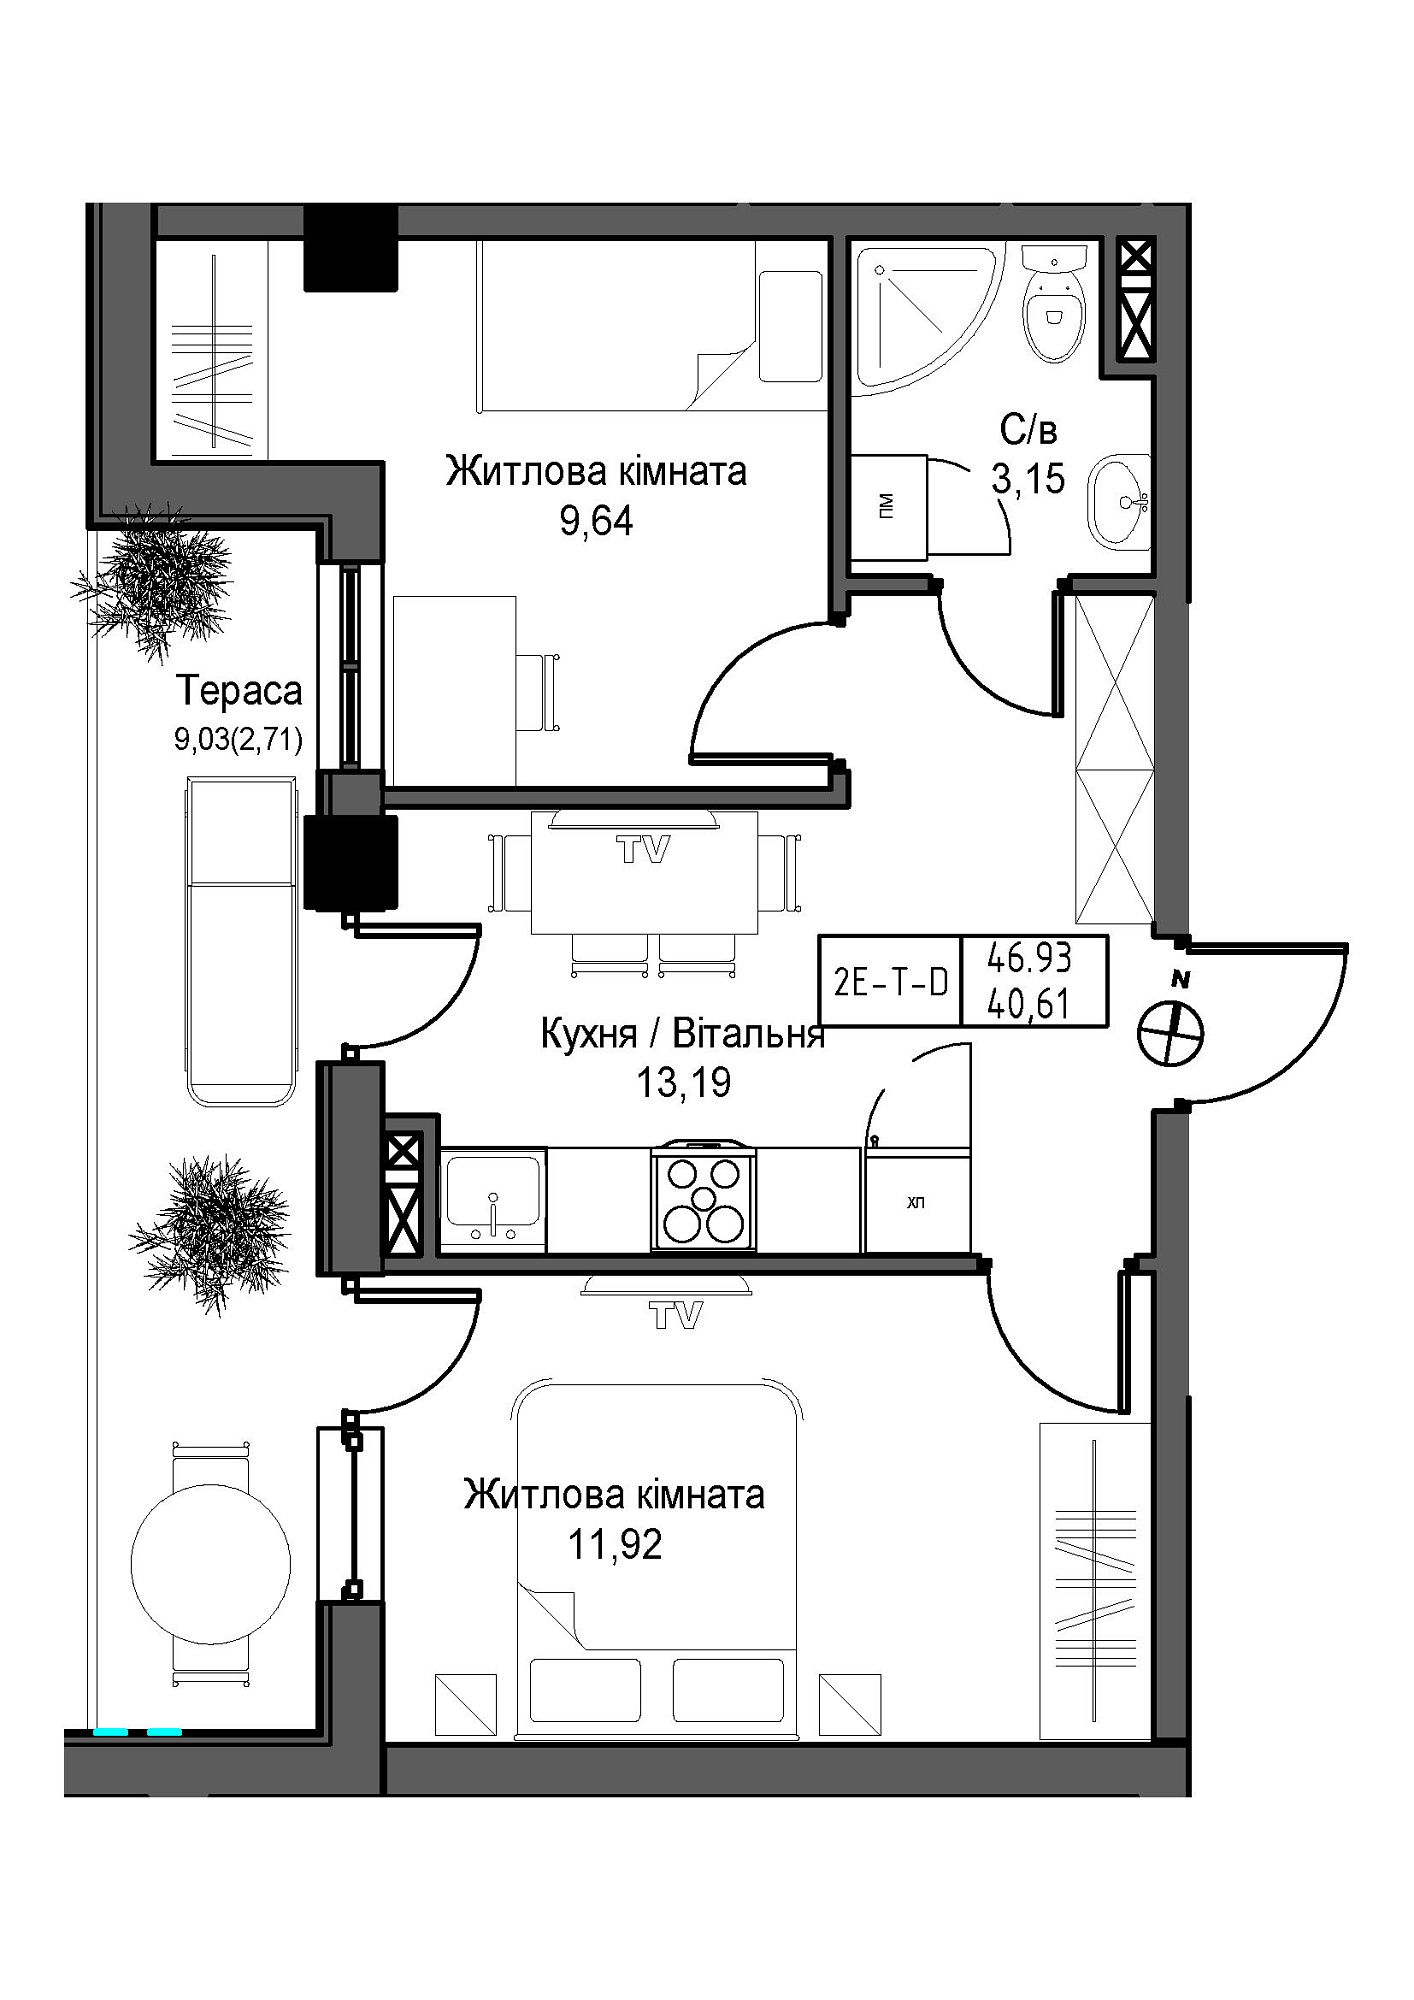 Planning 2-rm flats area 40.61m2, UM-007-06/0001.